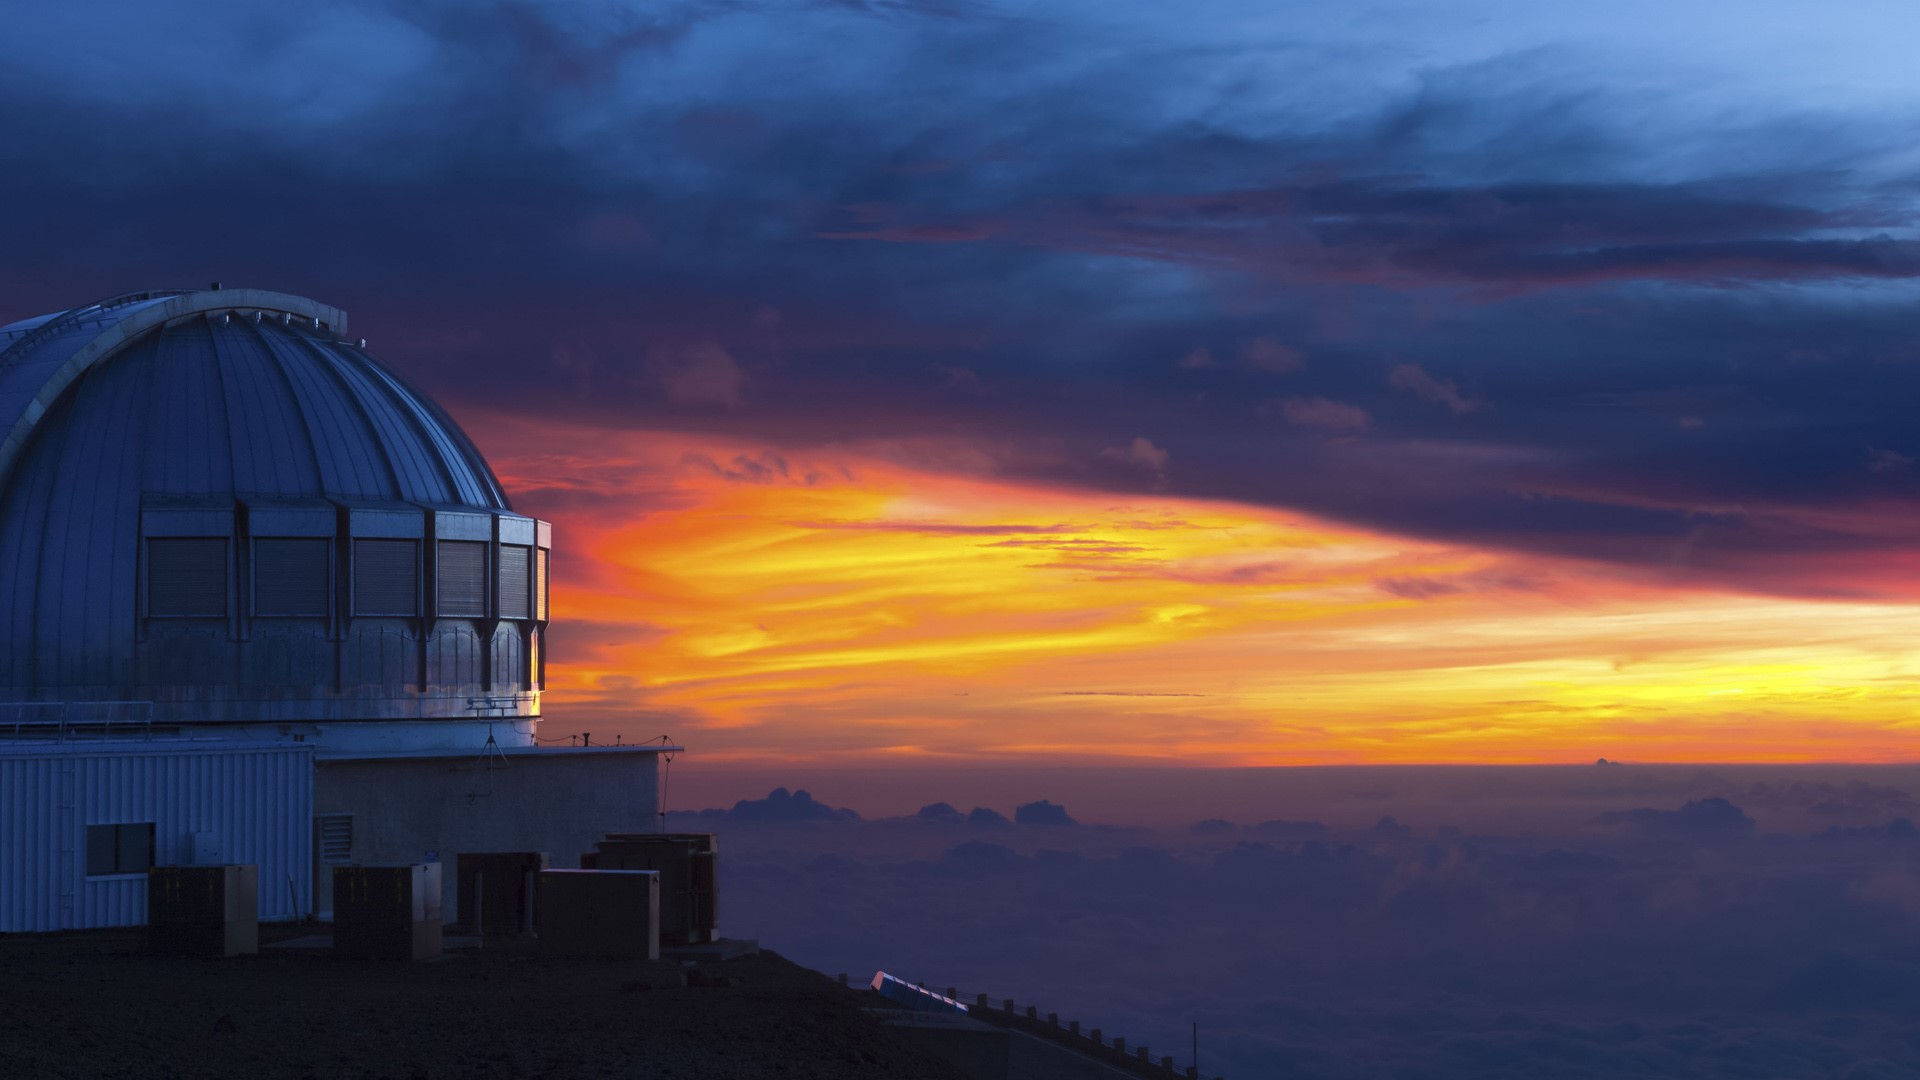 United Kingdom infrared telescope on Mauna Kea dormant volcano at sunset, Hawaii, USA. Windows 10 Spotlight Image